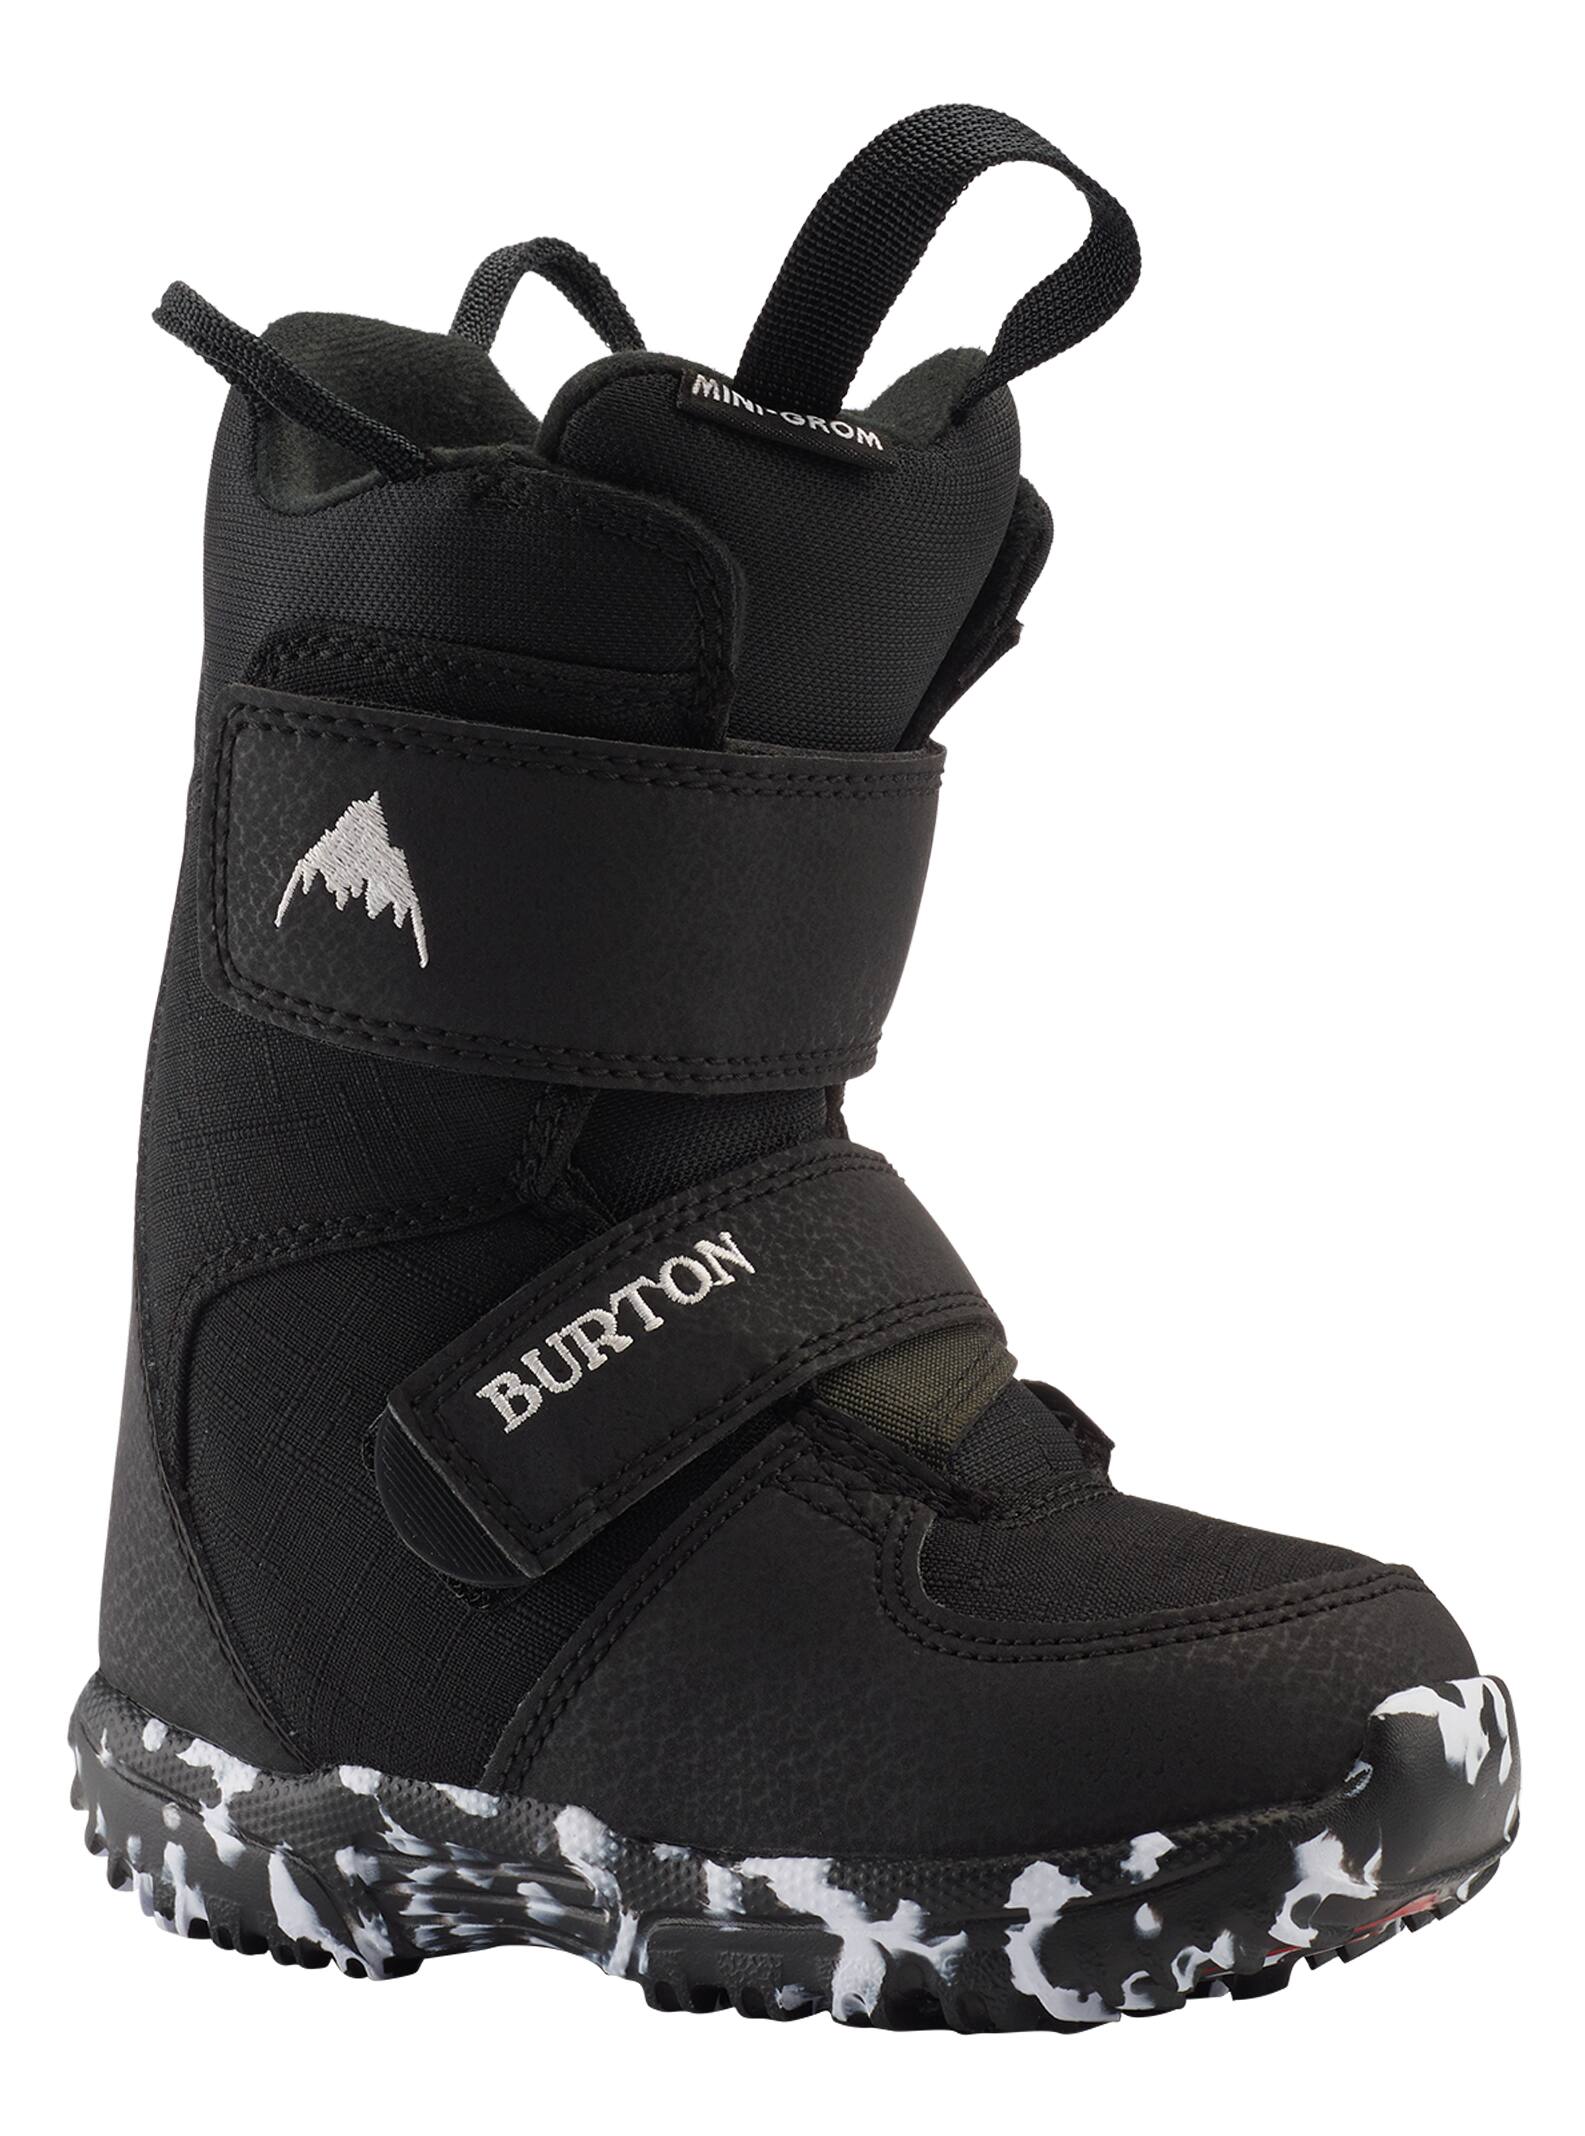 Burton - Boots de snowboard Mini-Grom tout-petit, Black, 12C